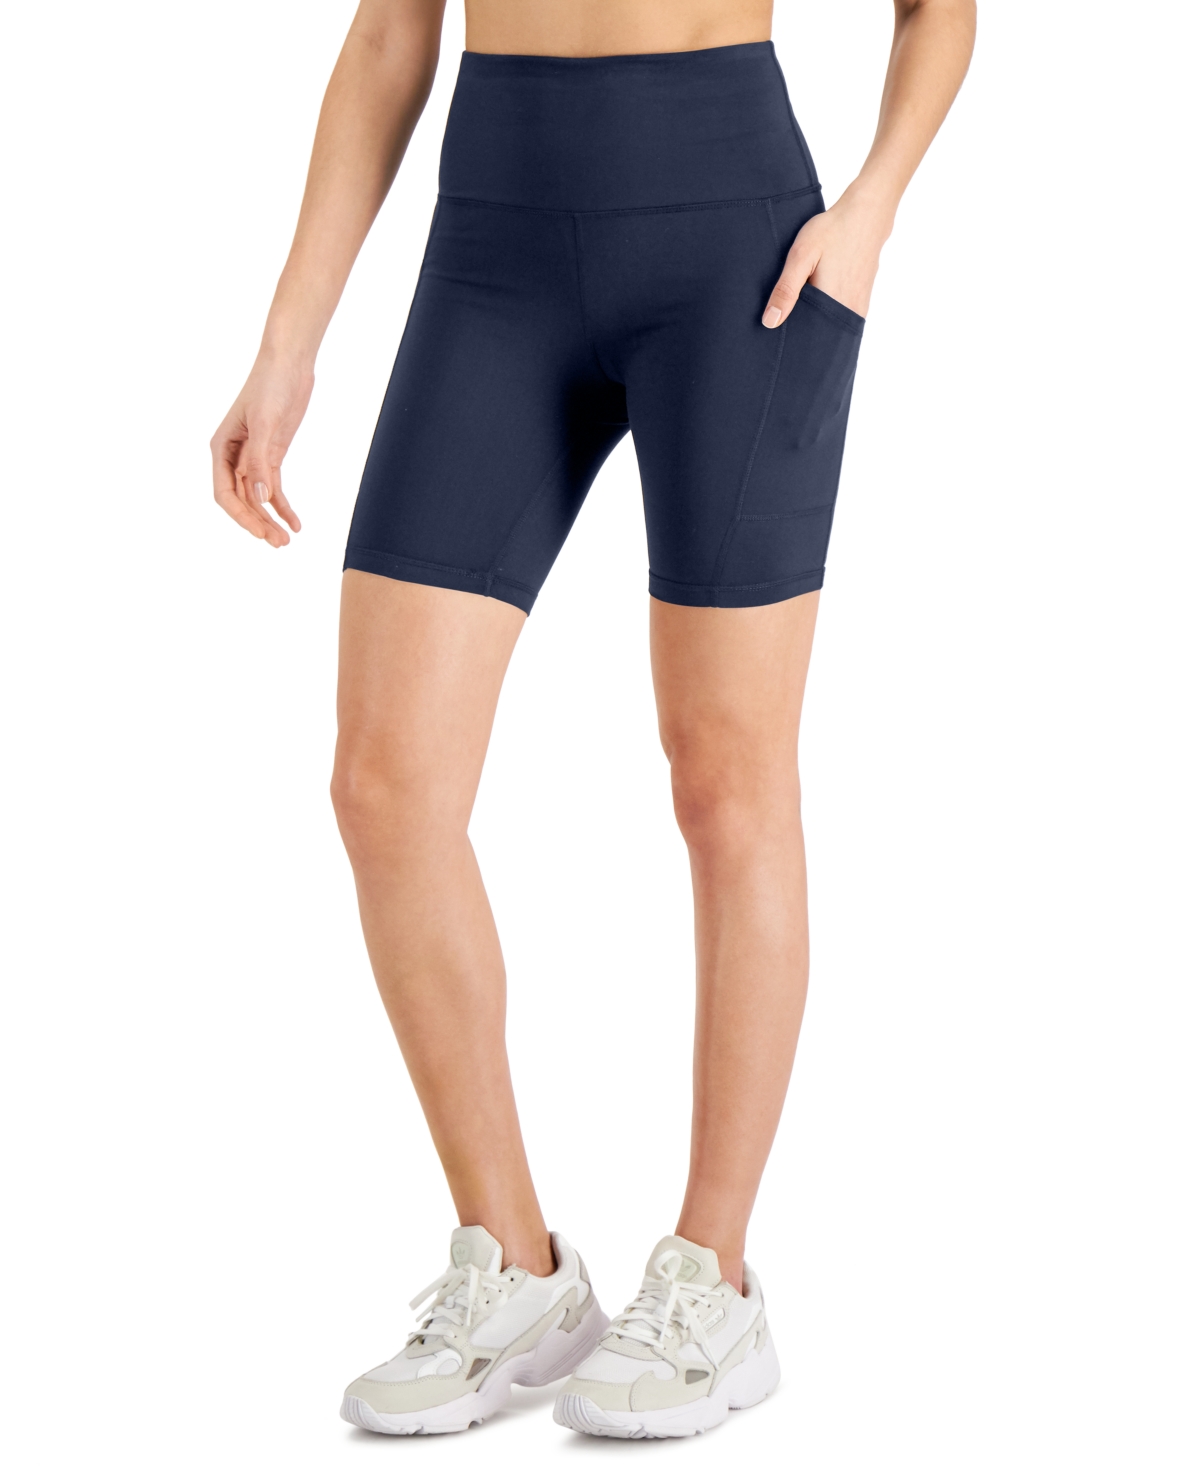 Women's Compression 7" Bike Shorts, Created for Macy's - Indigo Sea